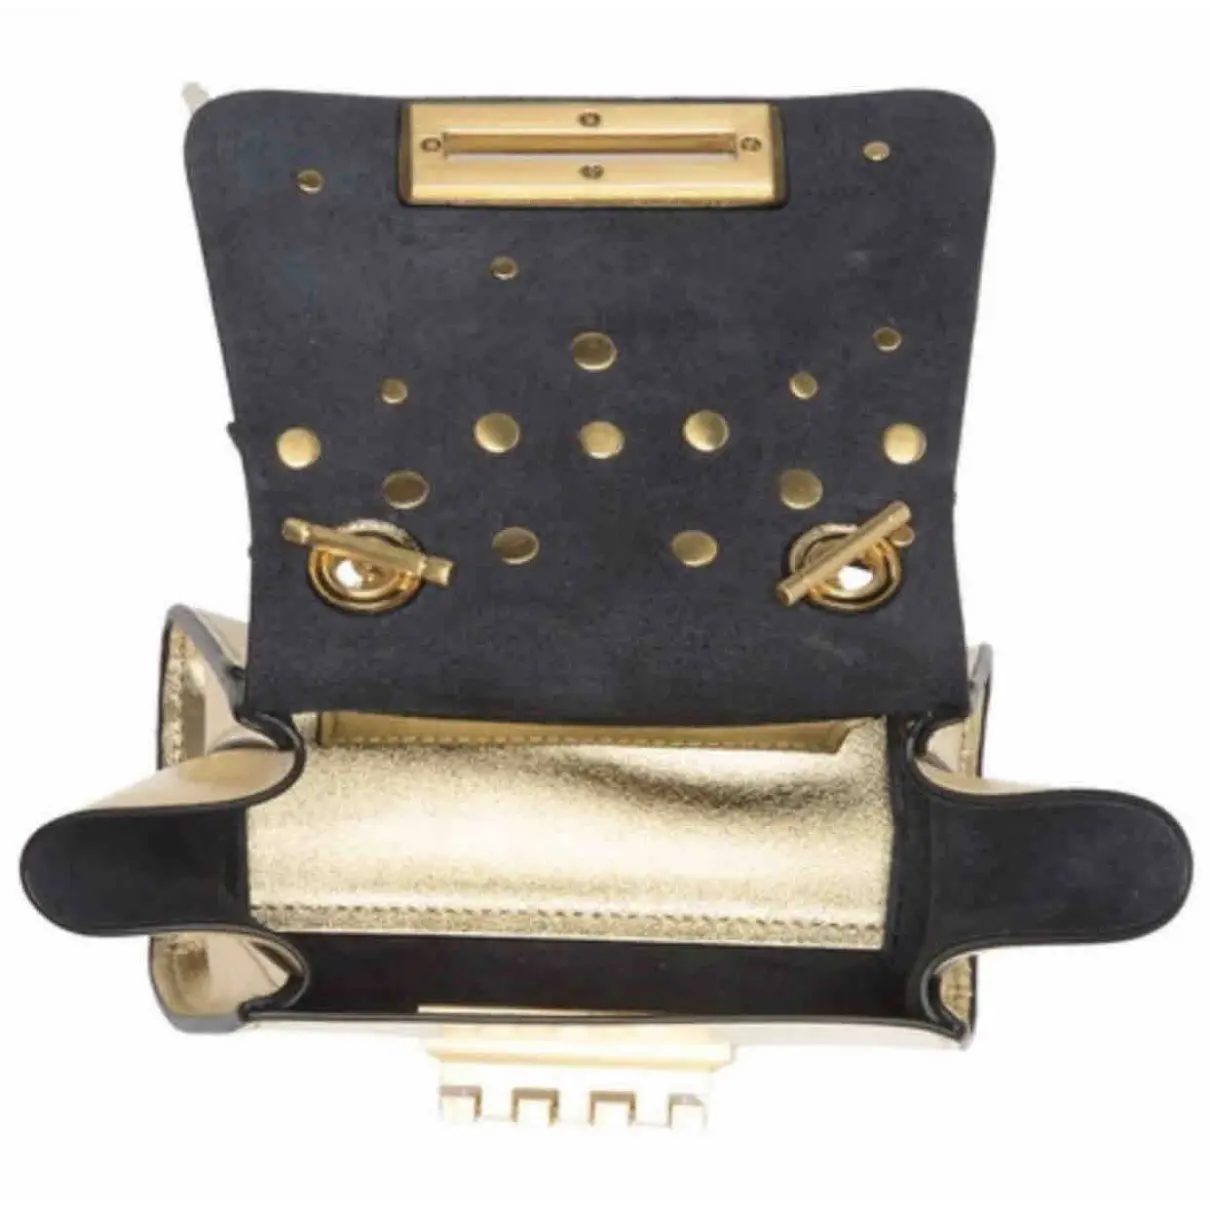 Buy Zac Posen Leather crossbody bag online